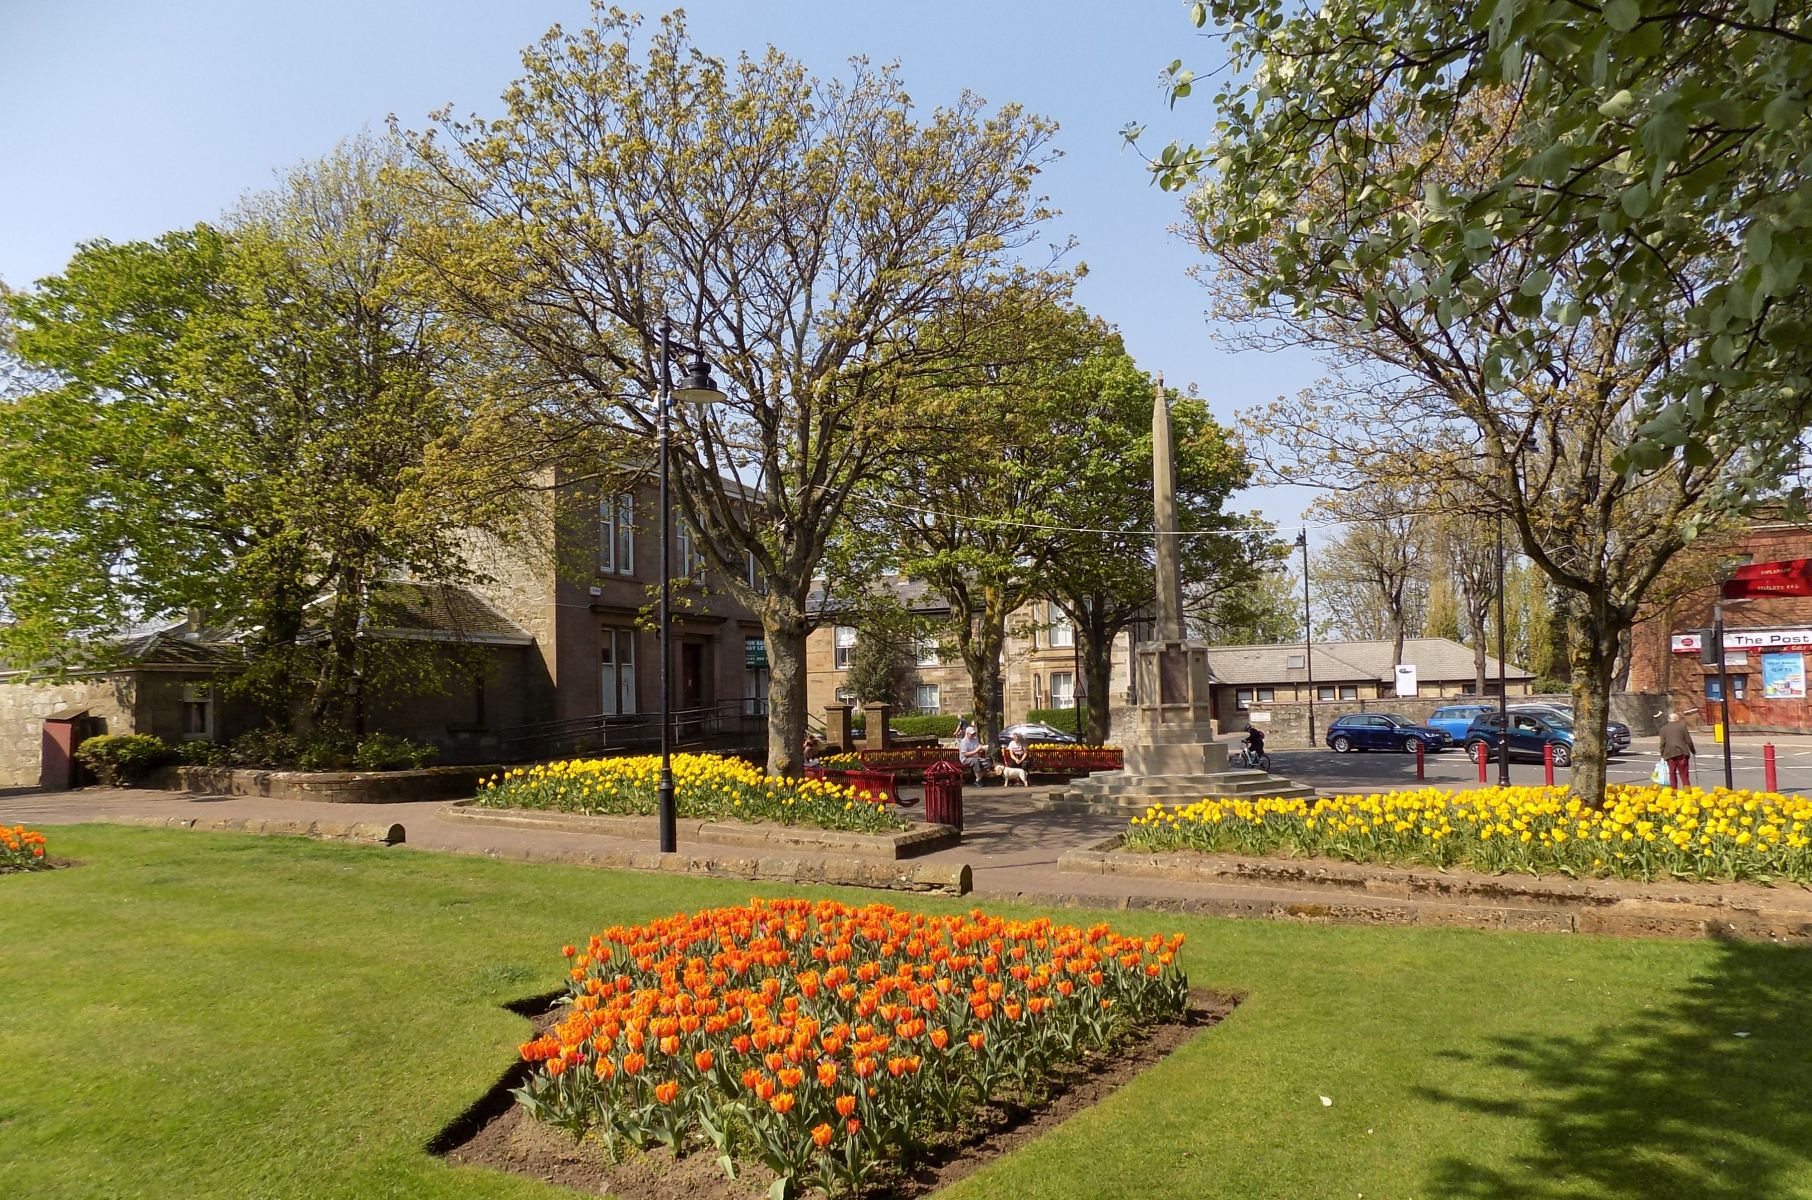 Boydfield Gardens and Mercat Cross in Prestwick